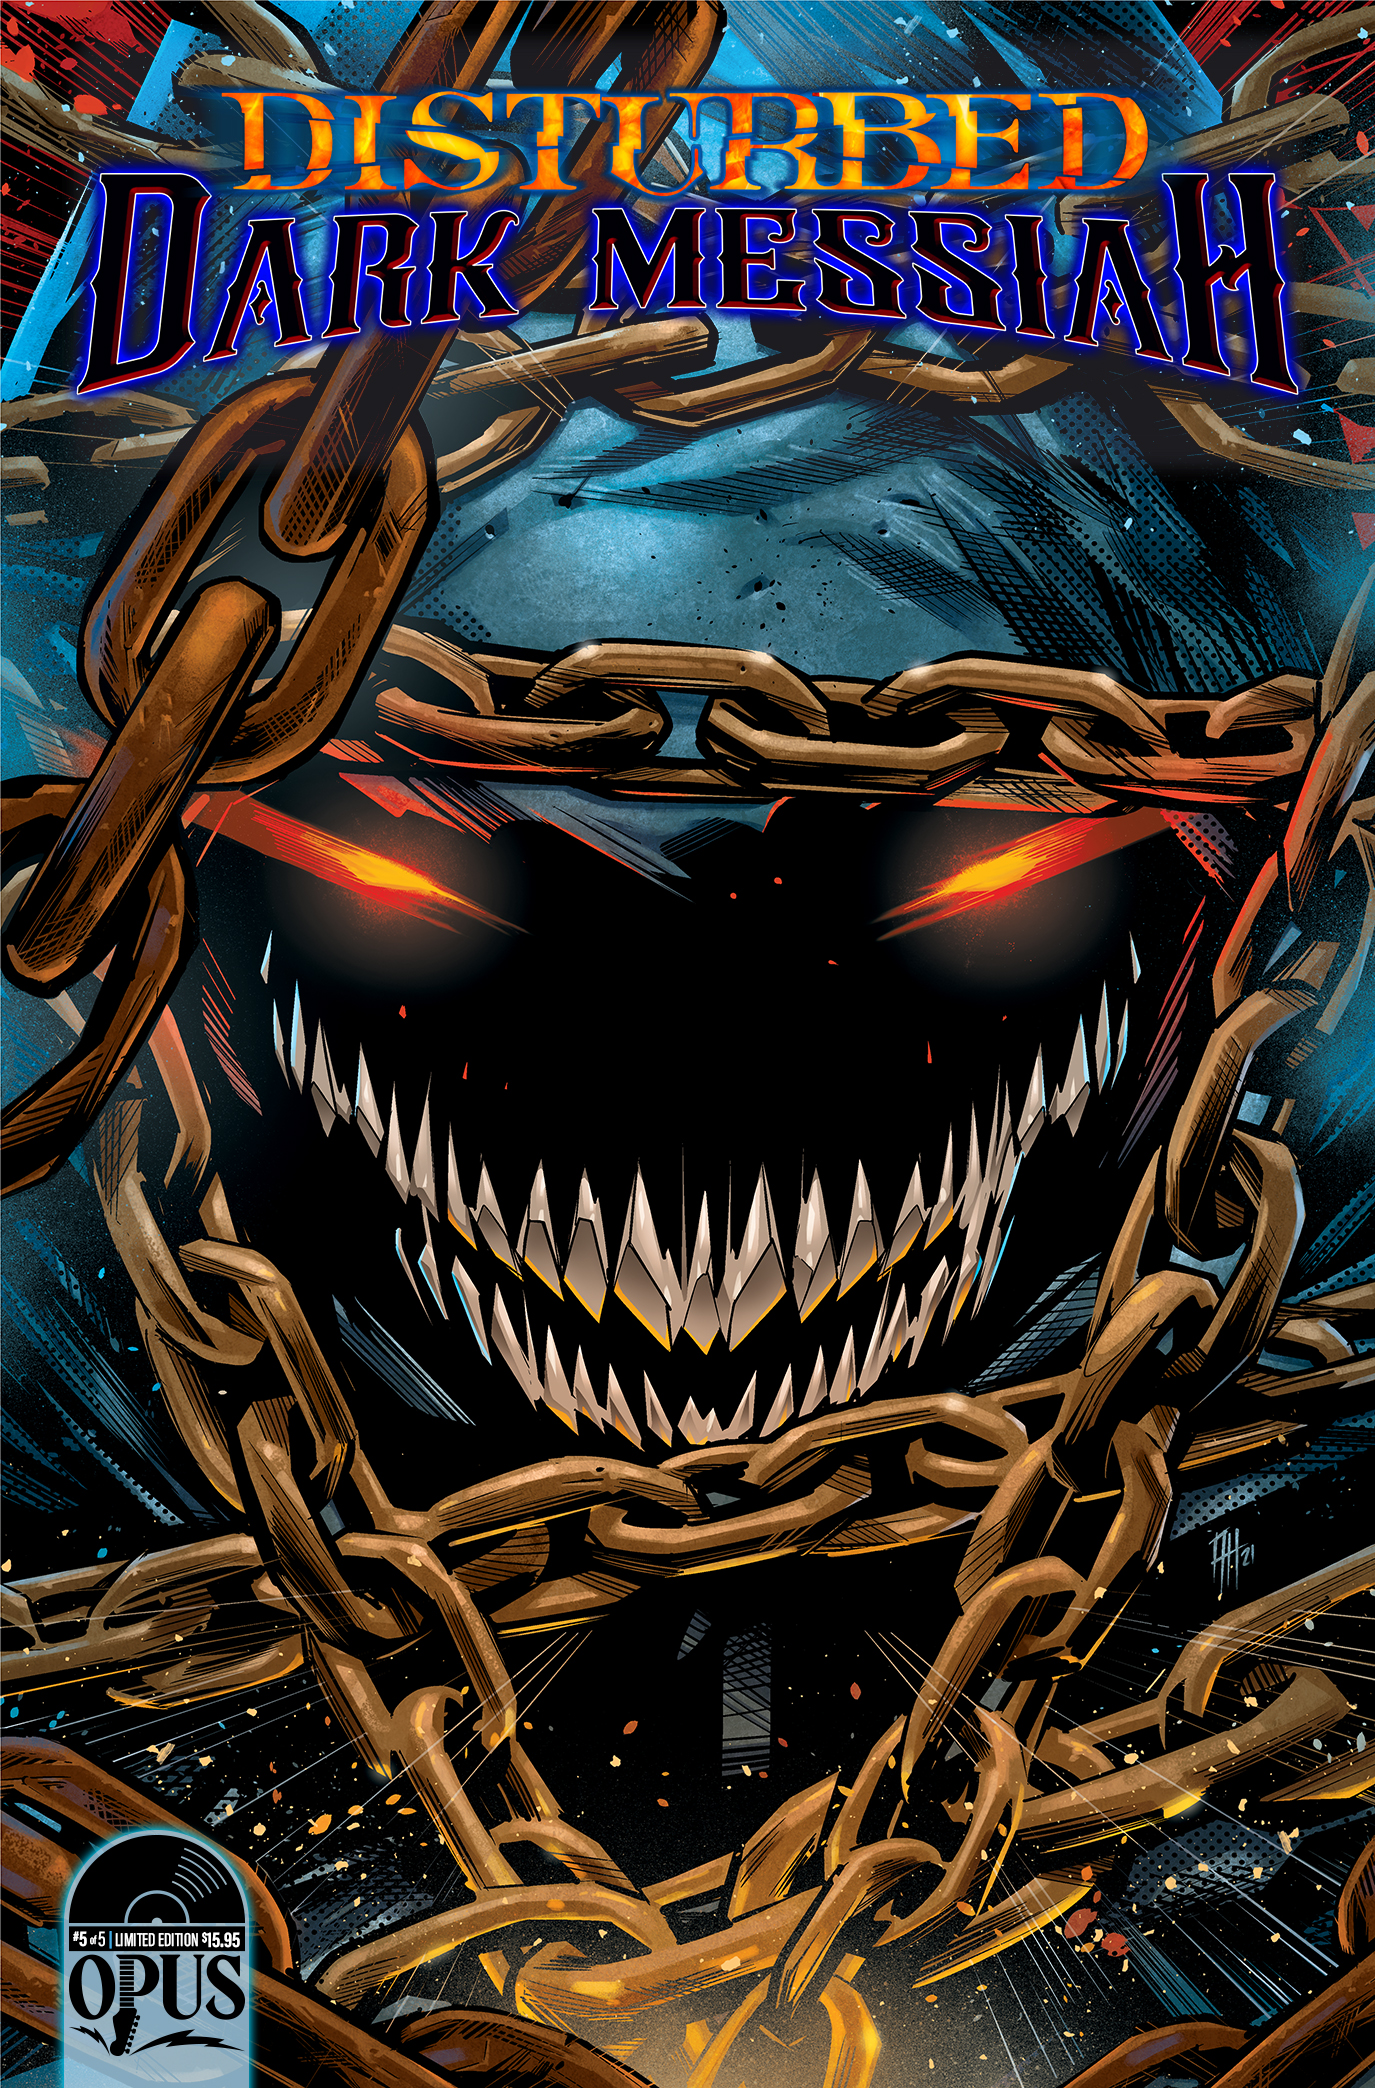 Disturbed: Dark Messiah Comic Book Issue #5 Cover 